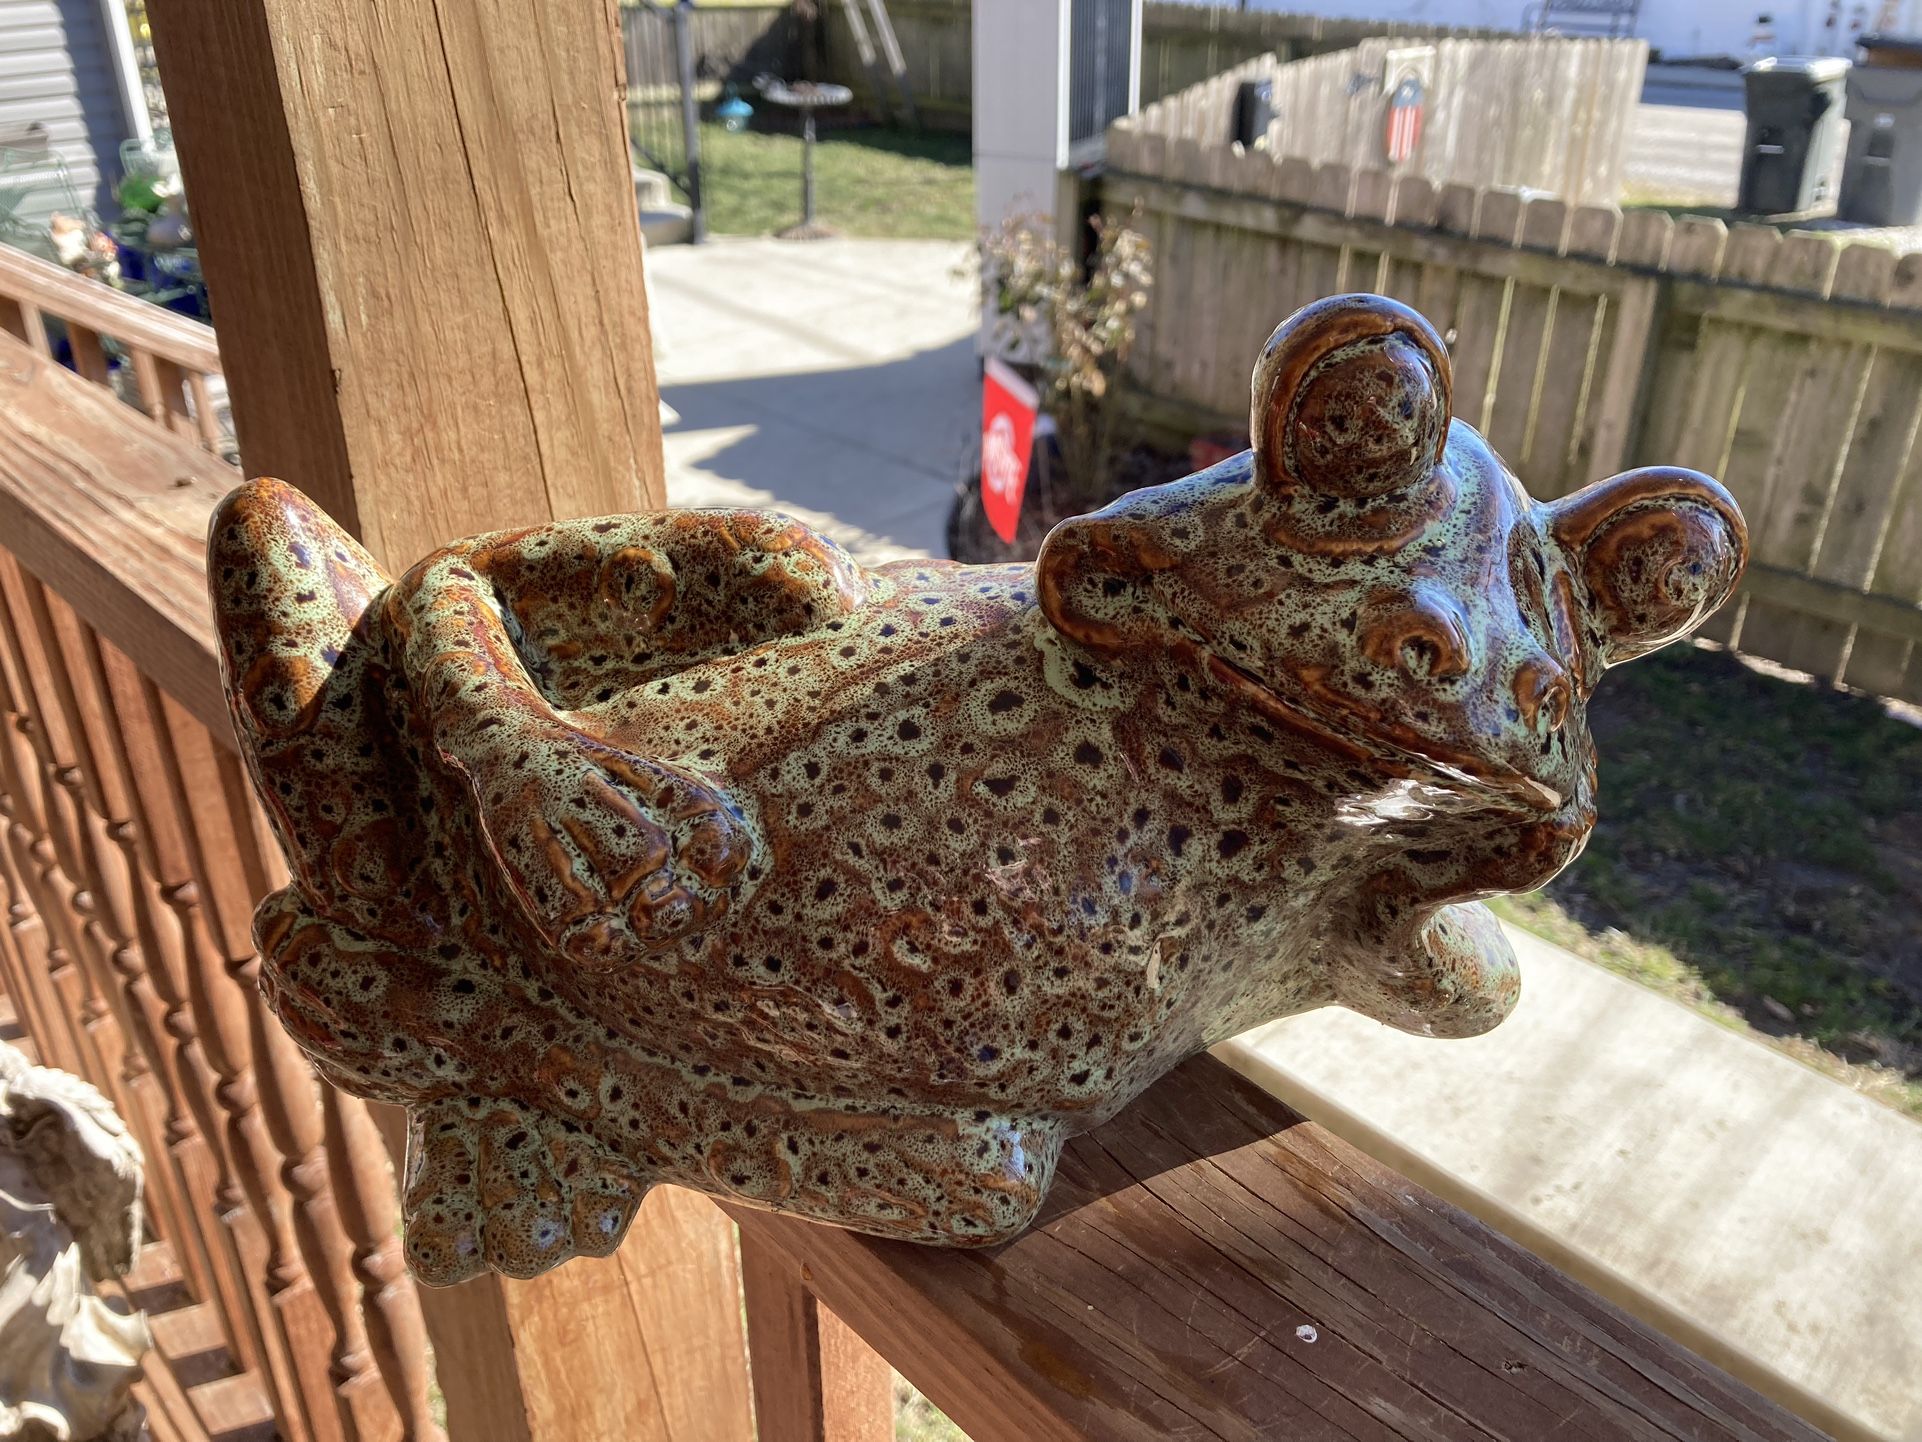 12” Long, Vintage Glazed Ceramic Frog. Excellent Condition